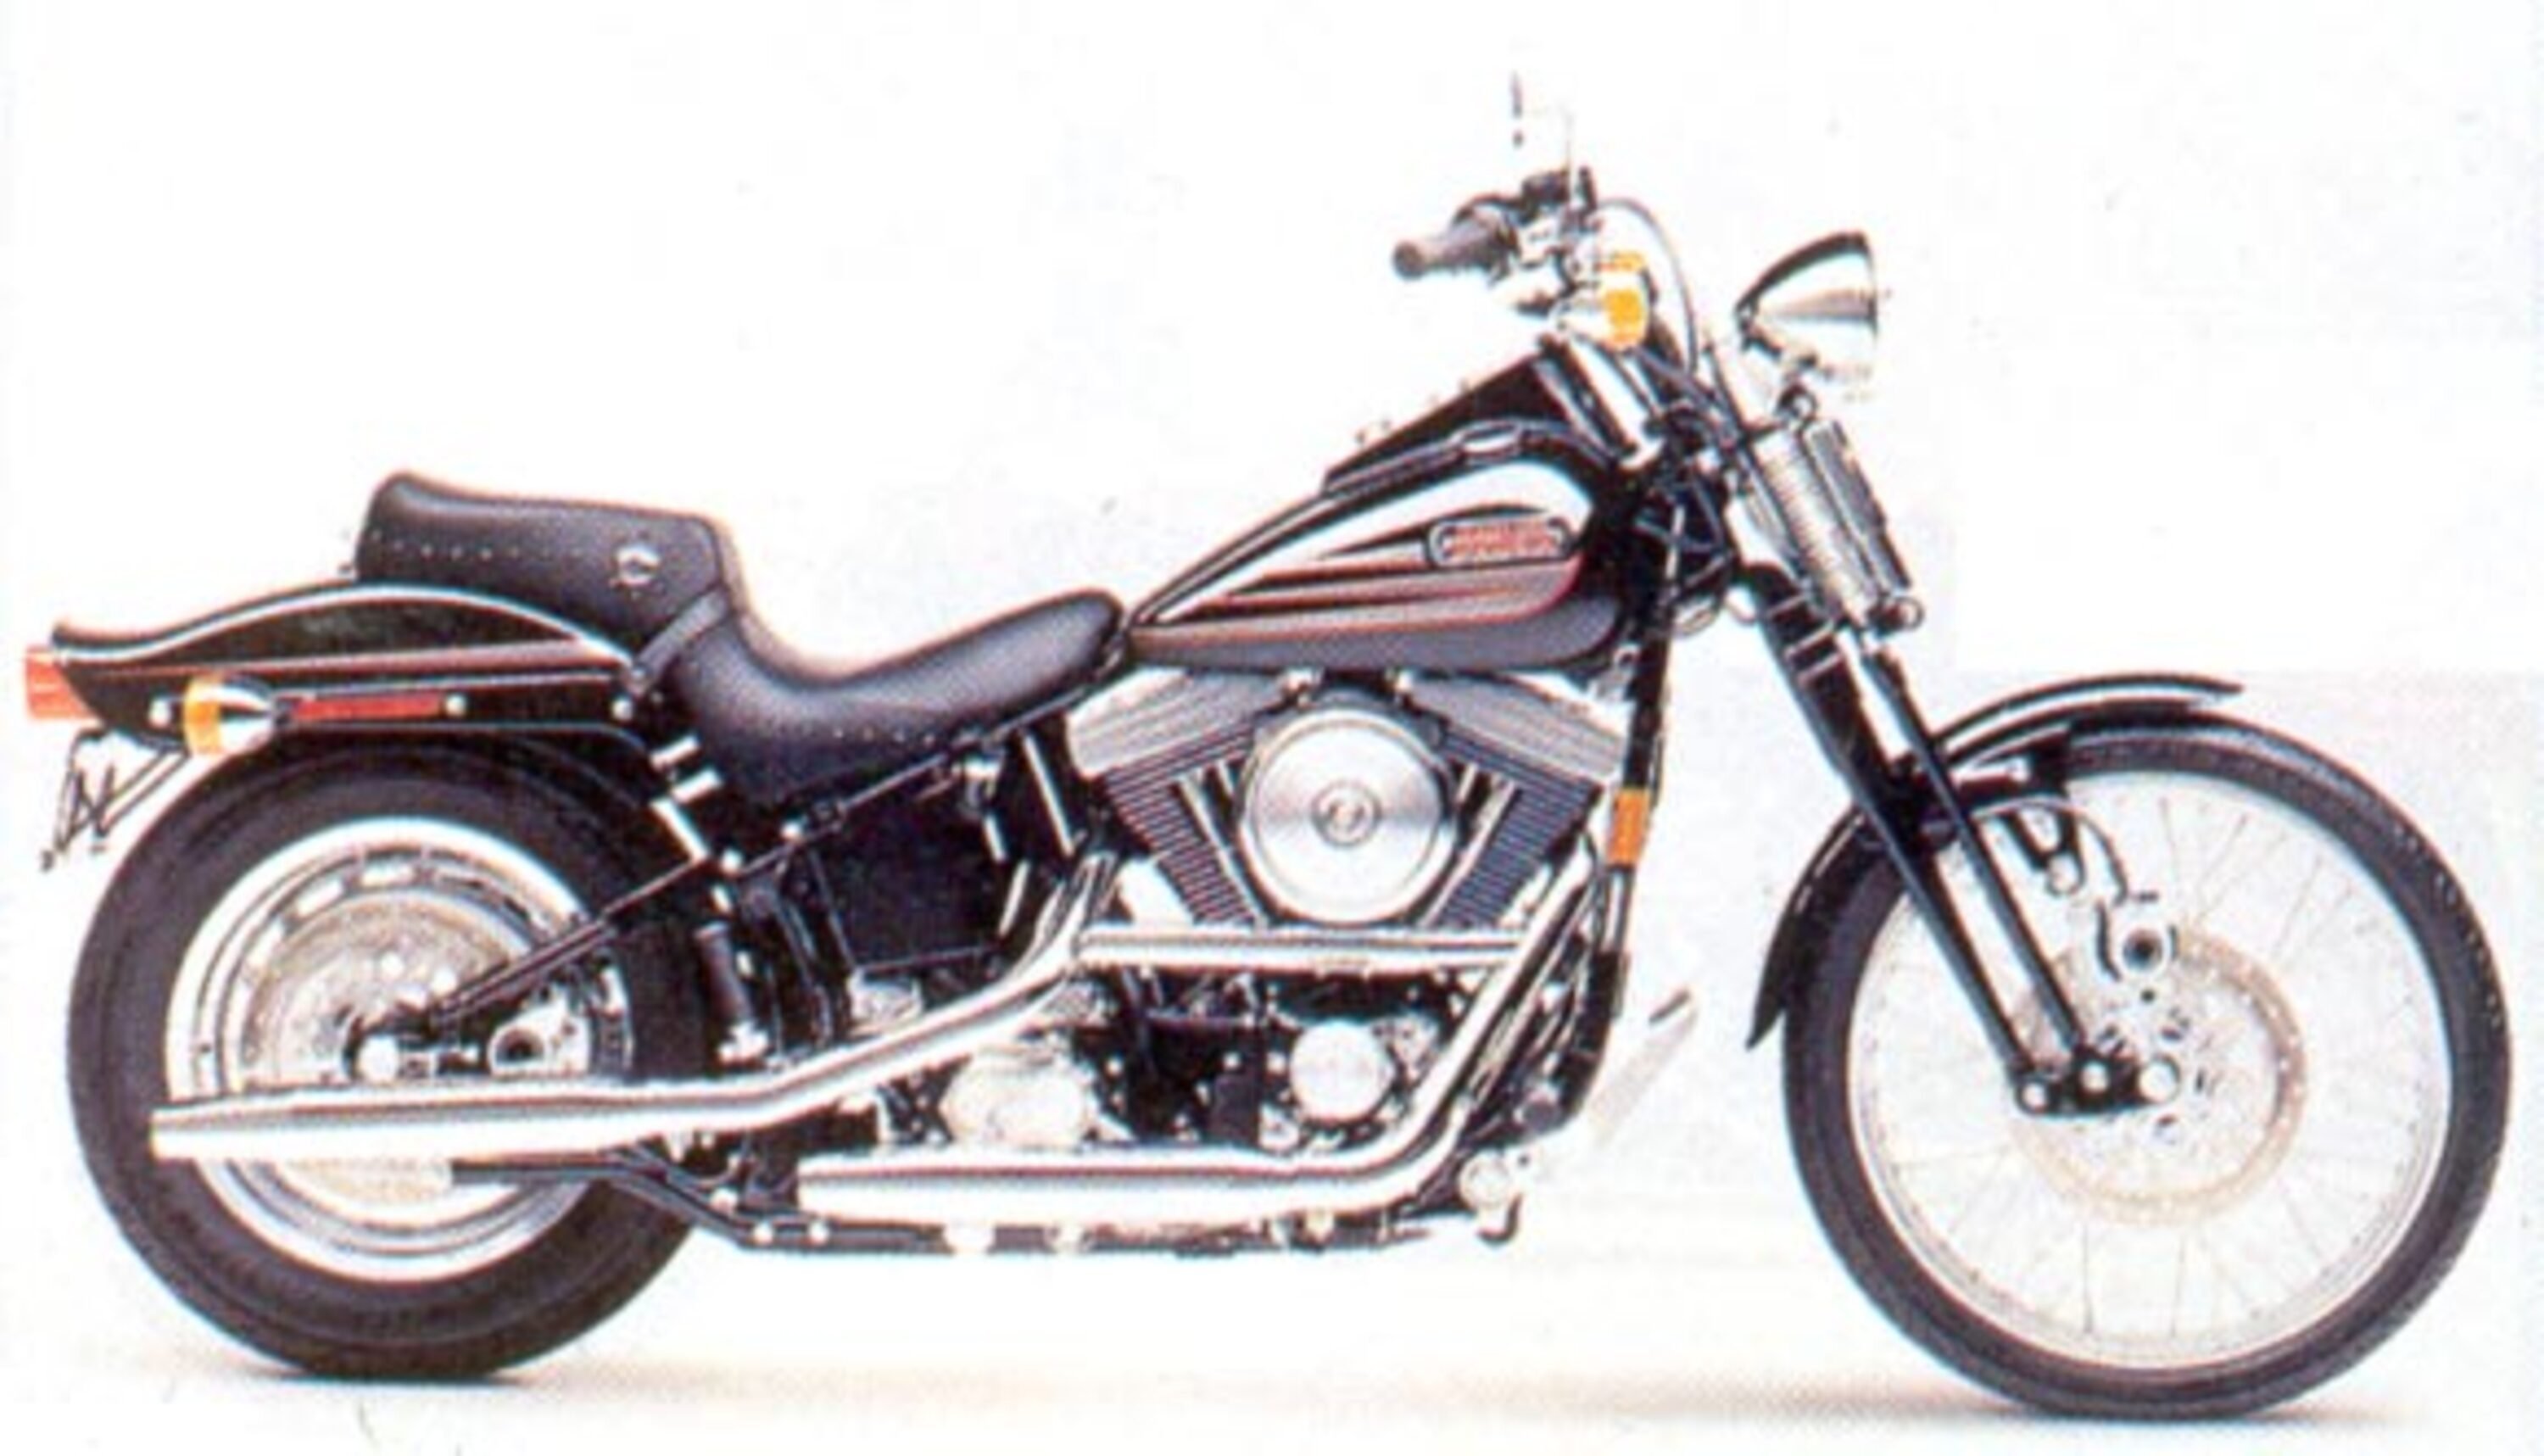 Harley-Davidson Softail 1340 Bad Boy (1995 - 99)